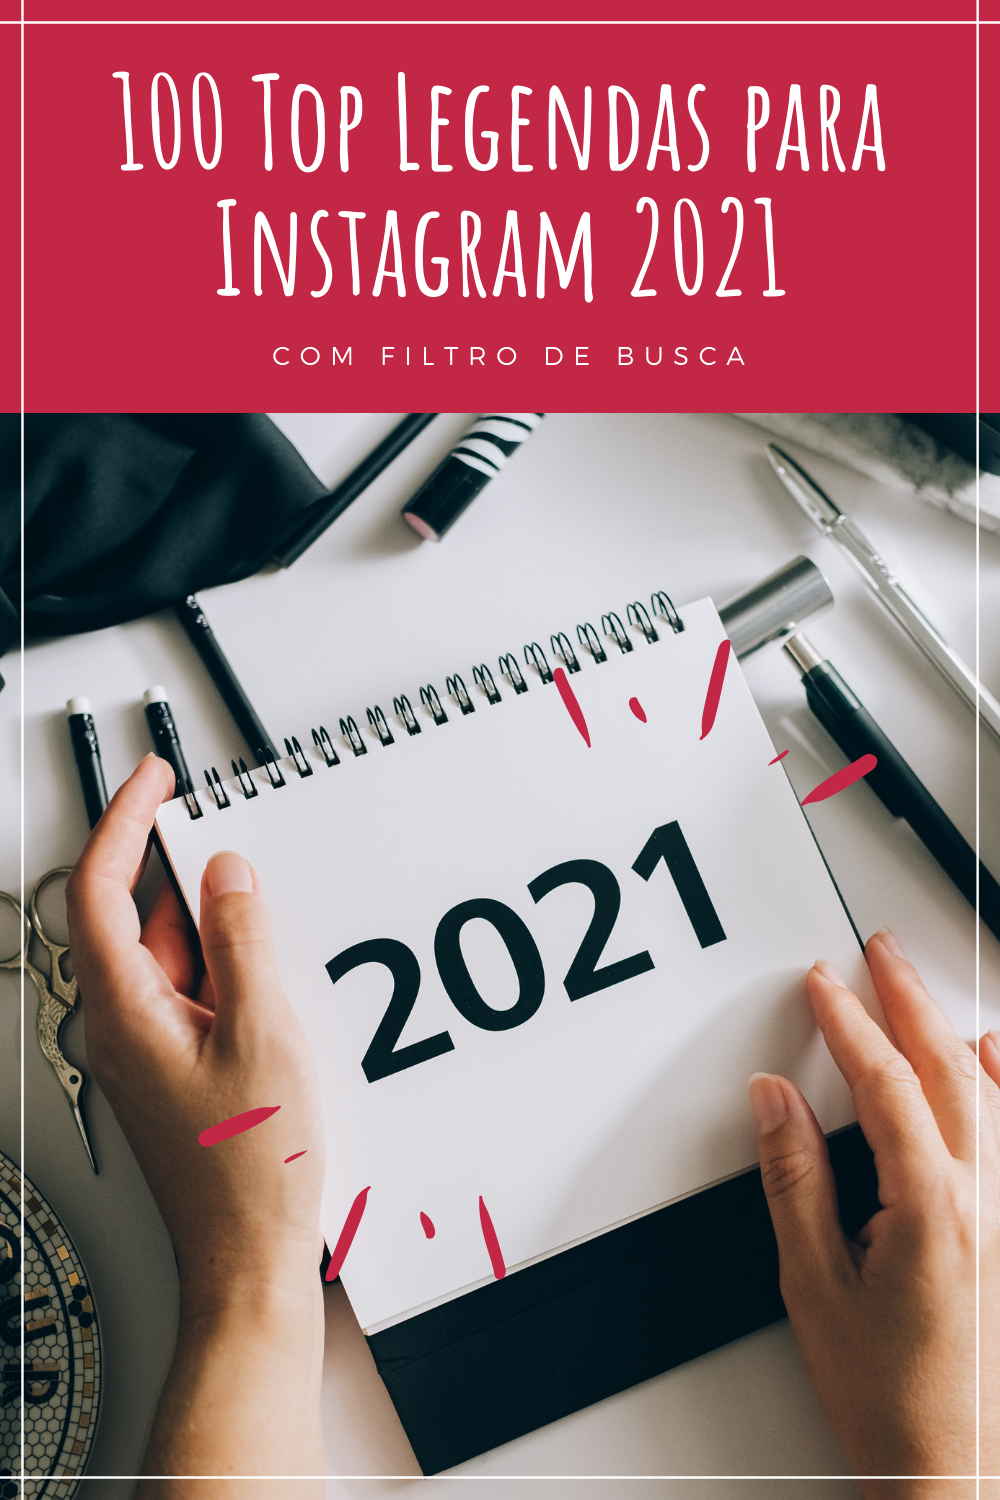 caption for instagram 2021